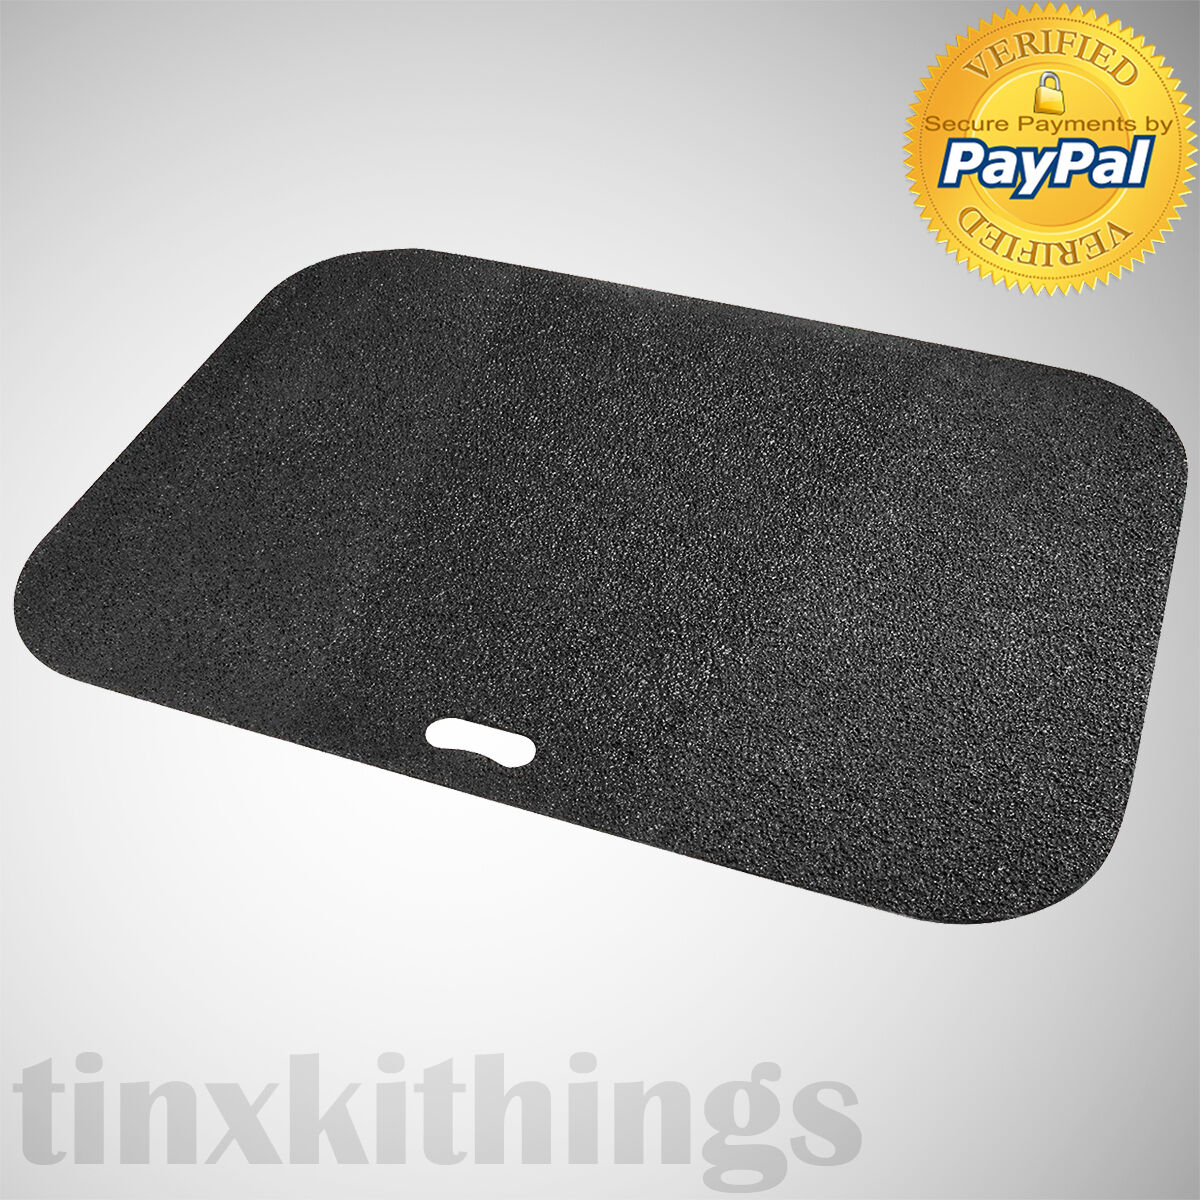 Large Grill Pad Mat Rectangle Outdoor Composite Deck Protect Decking regarding measurements 1200 X 1200